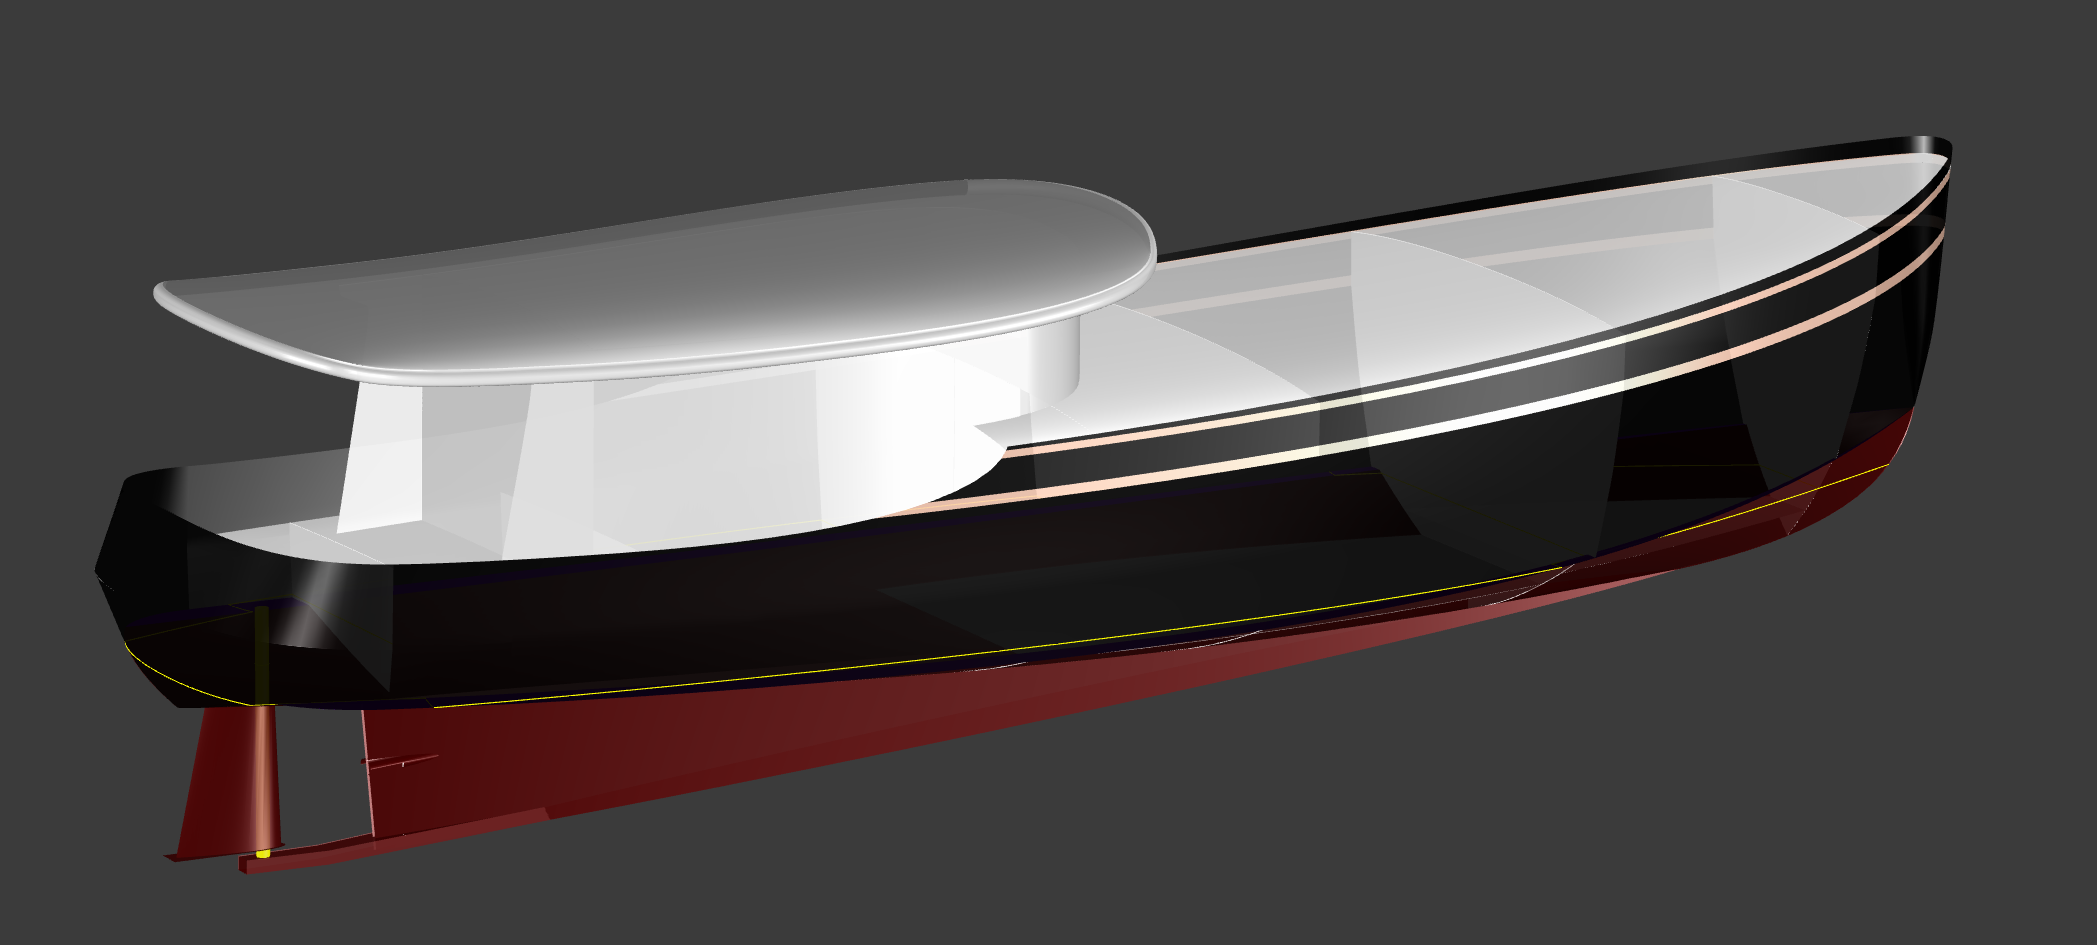 55' Euro Express Motor Yacht - Kasten Marine Design, Inc.